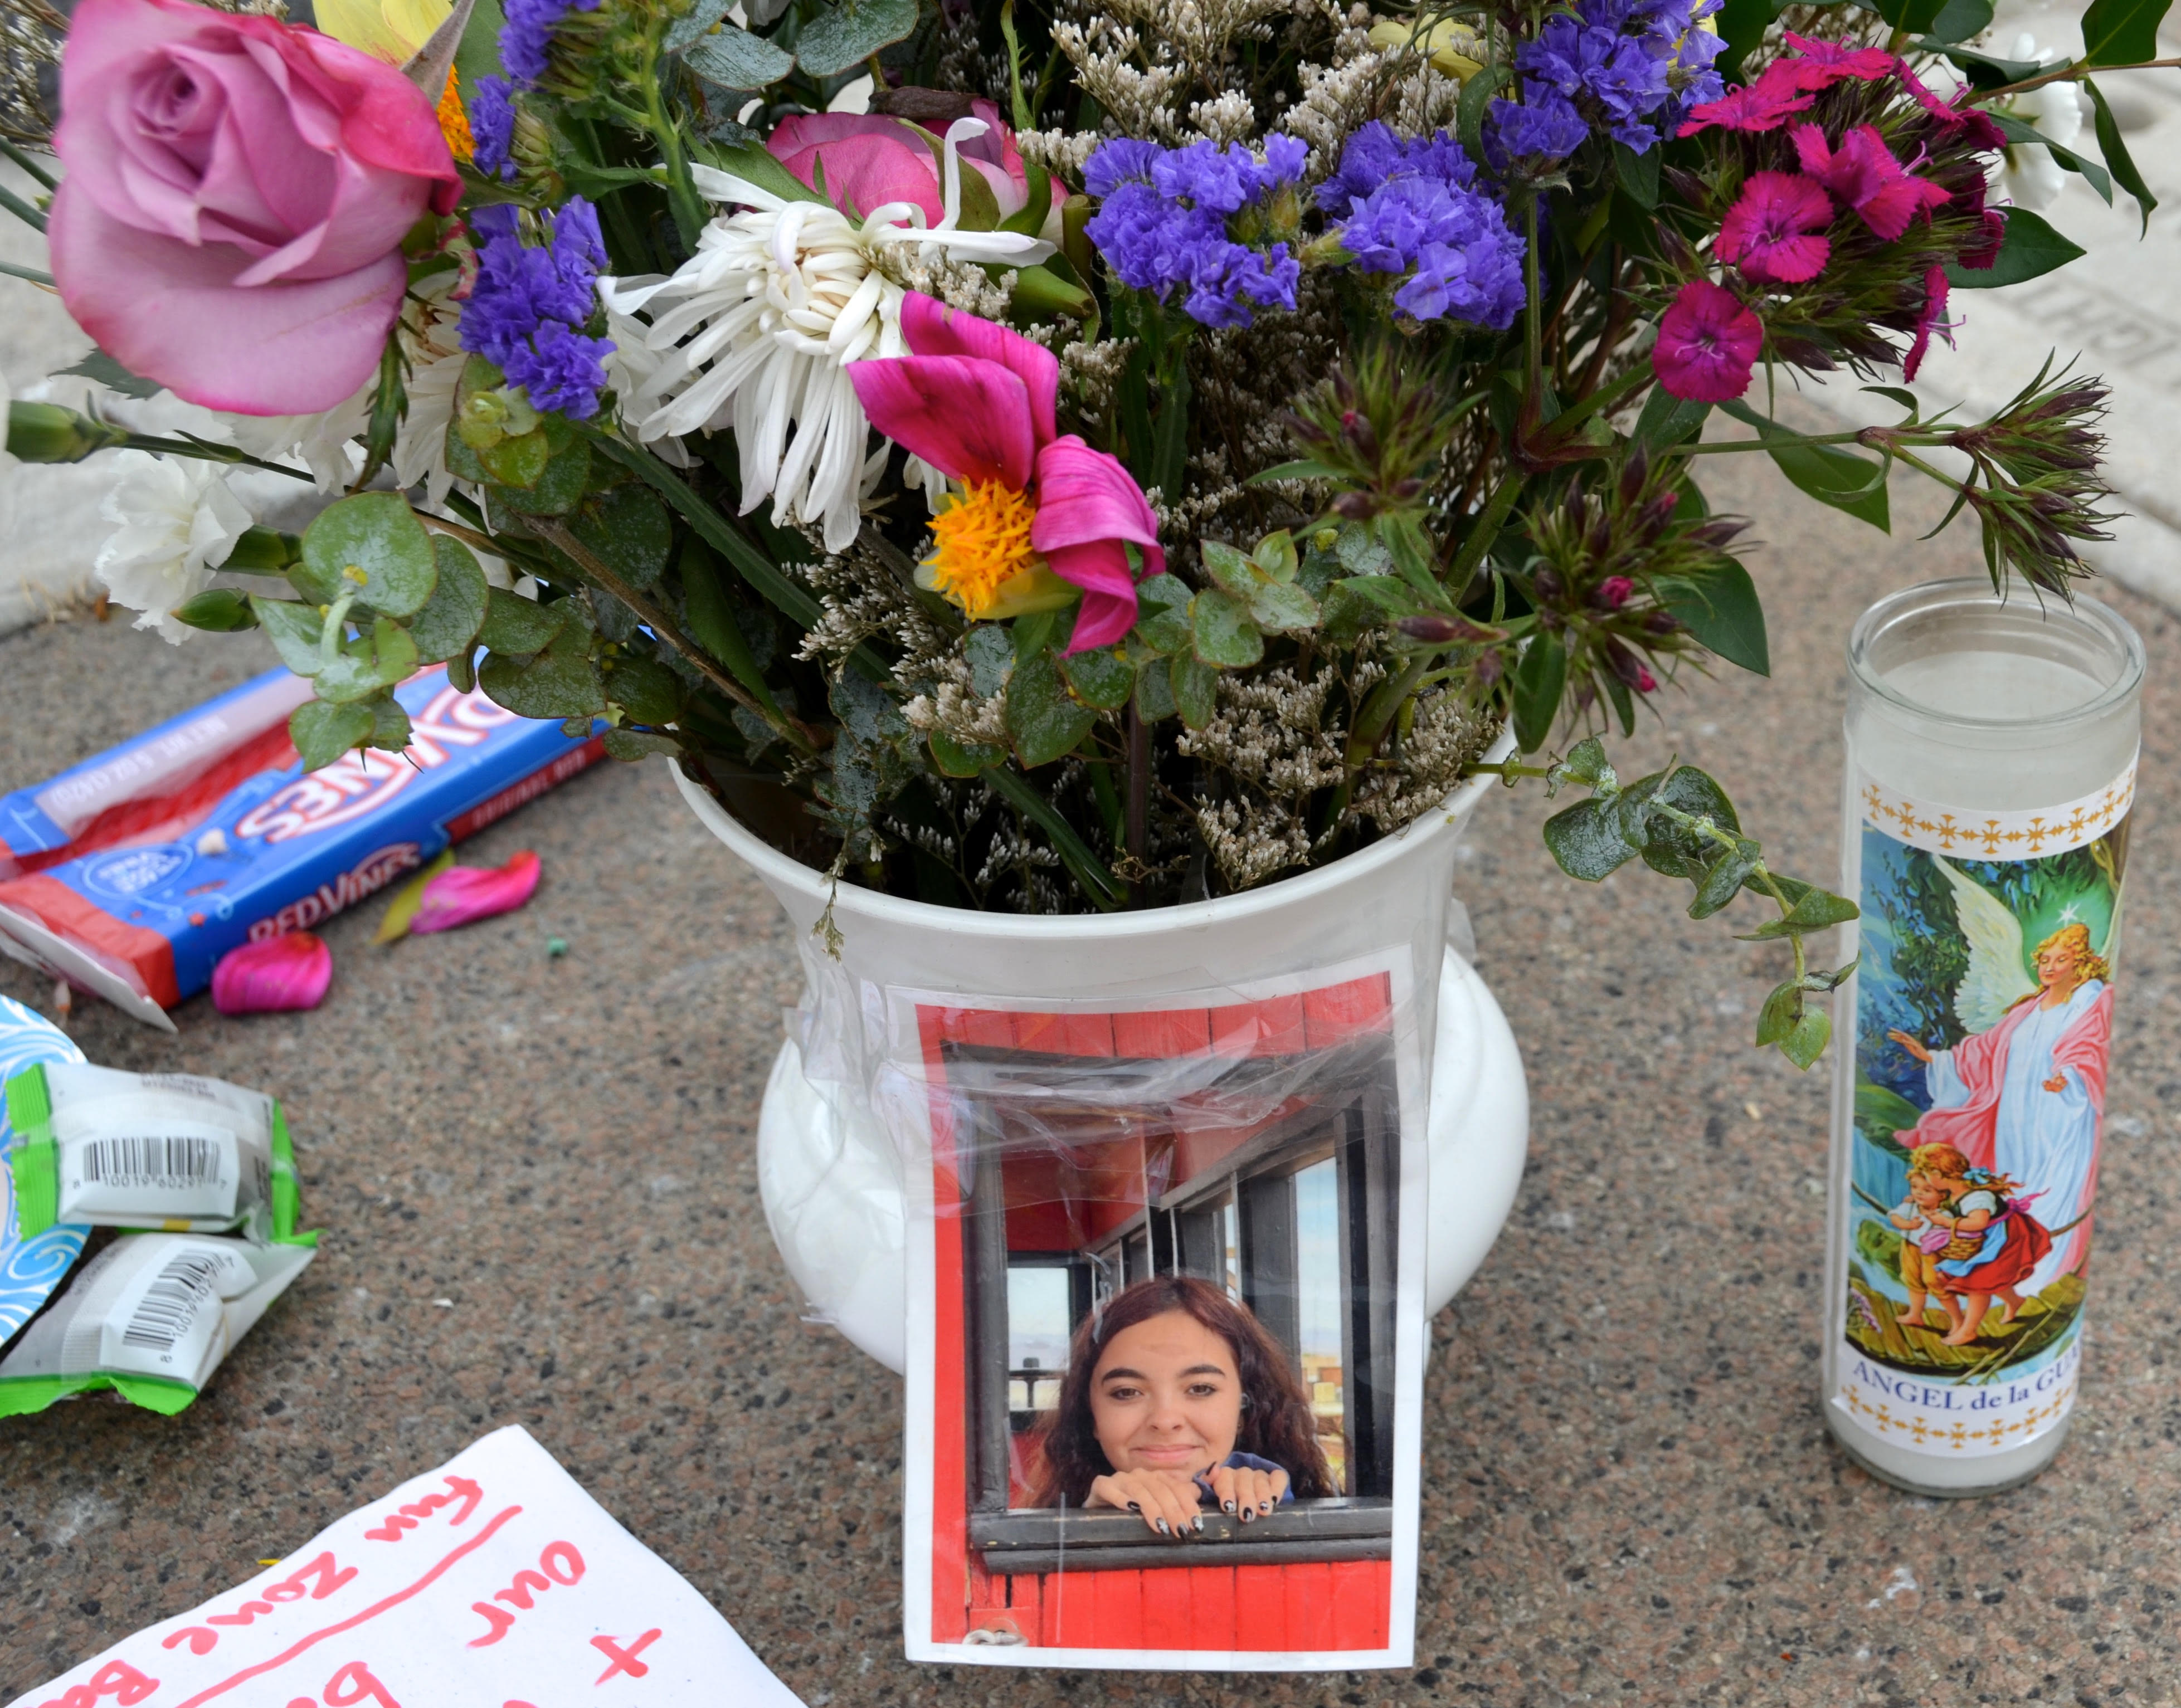 Vigil mourns 14-year-old killed in suspected DUI crash near Balboa Fun Zone